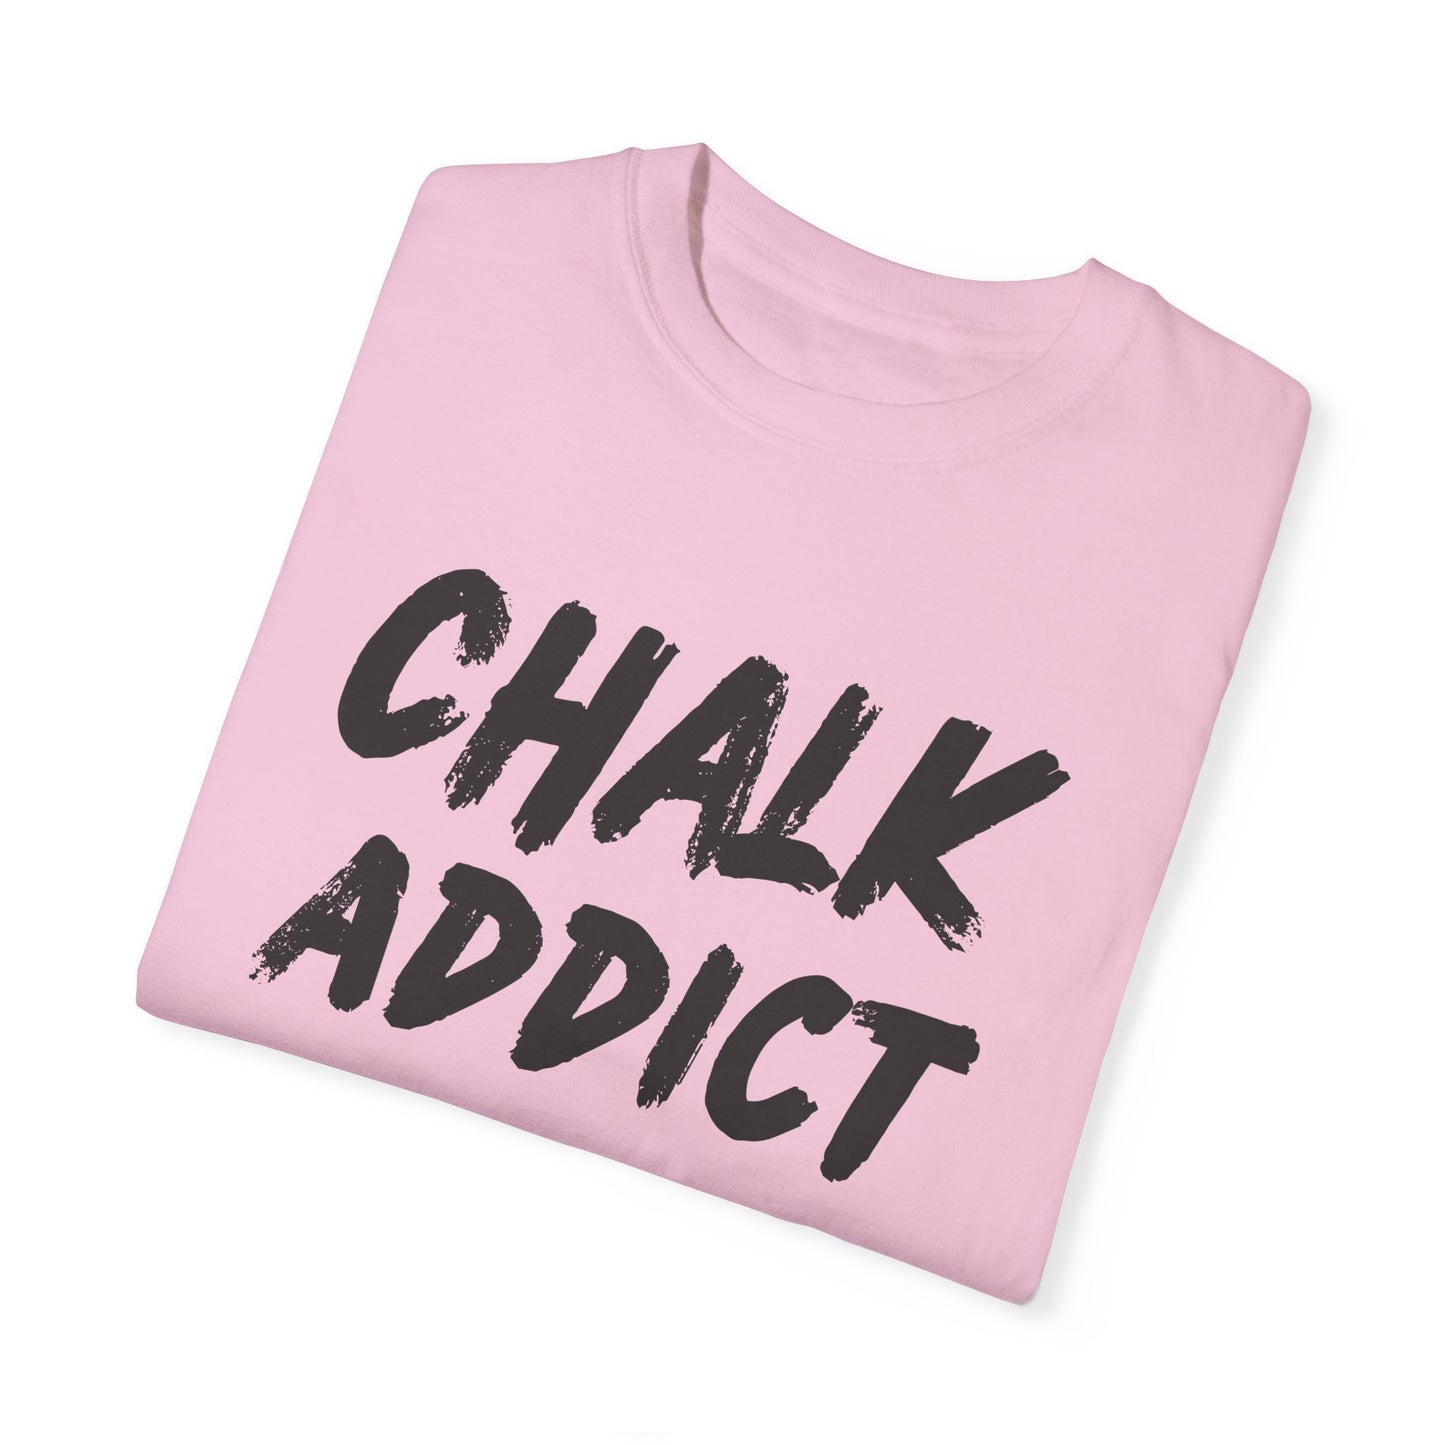 Chalk Addict Unisex Tee